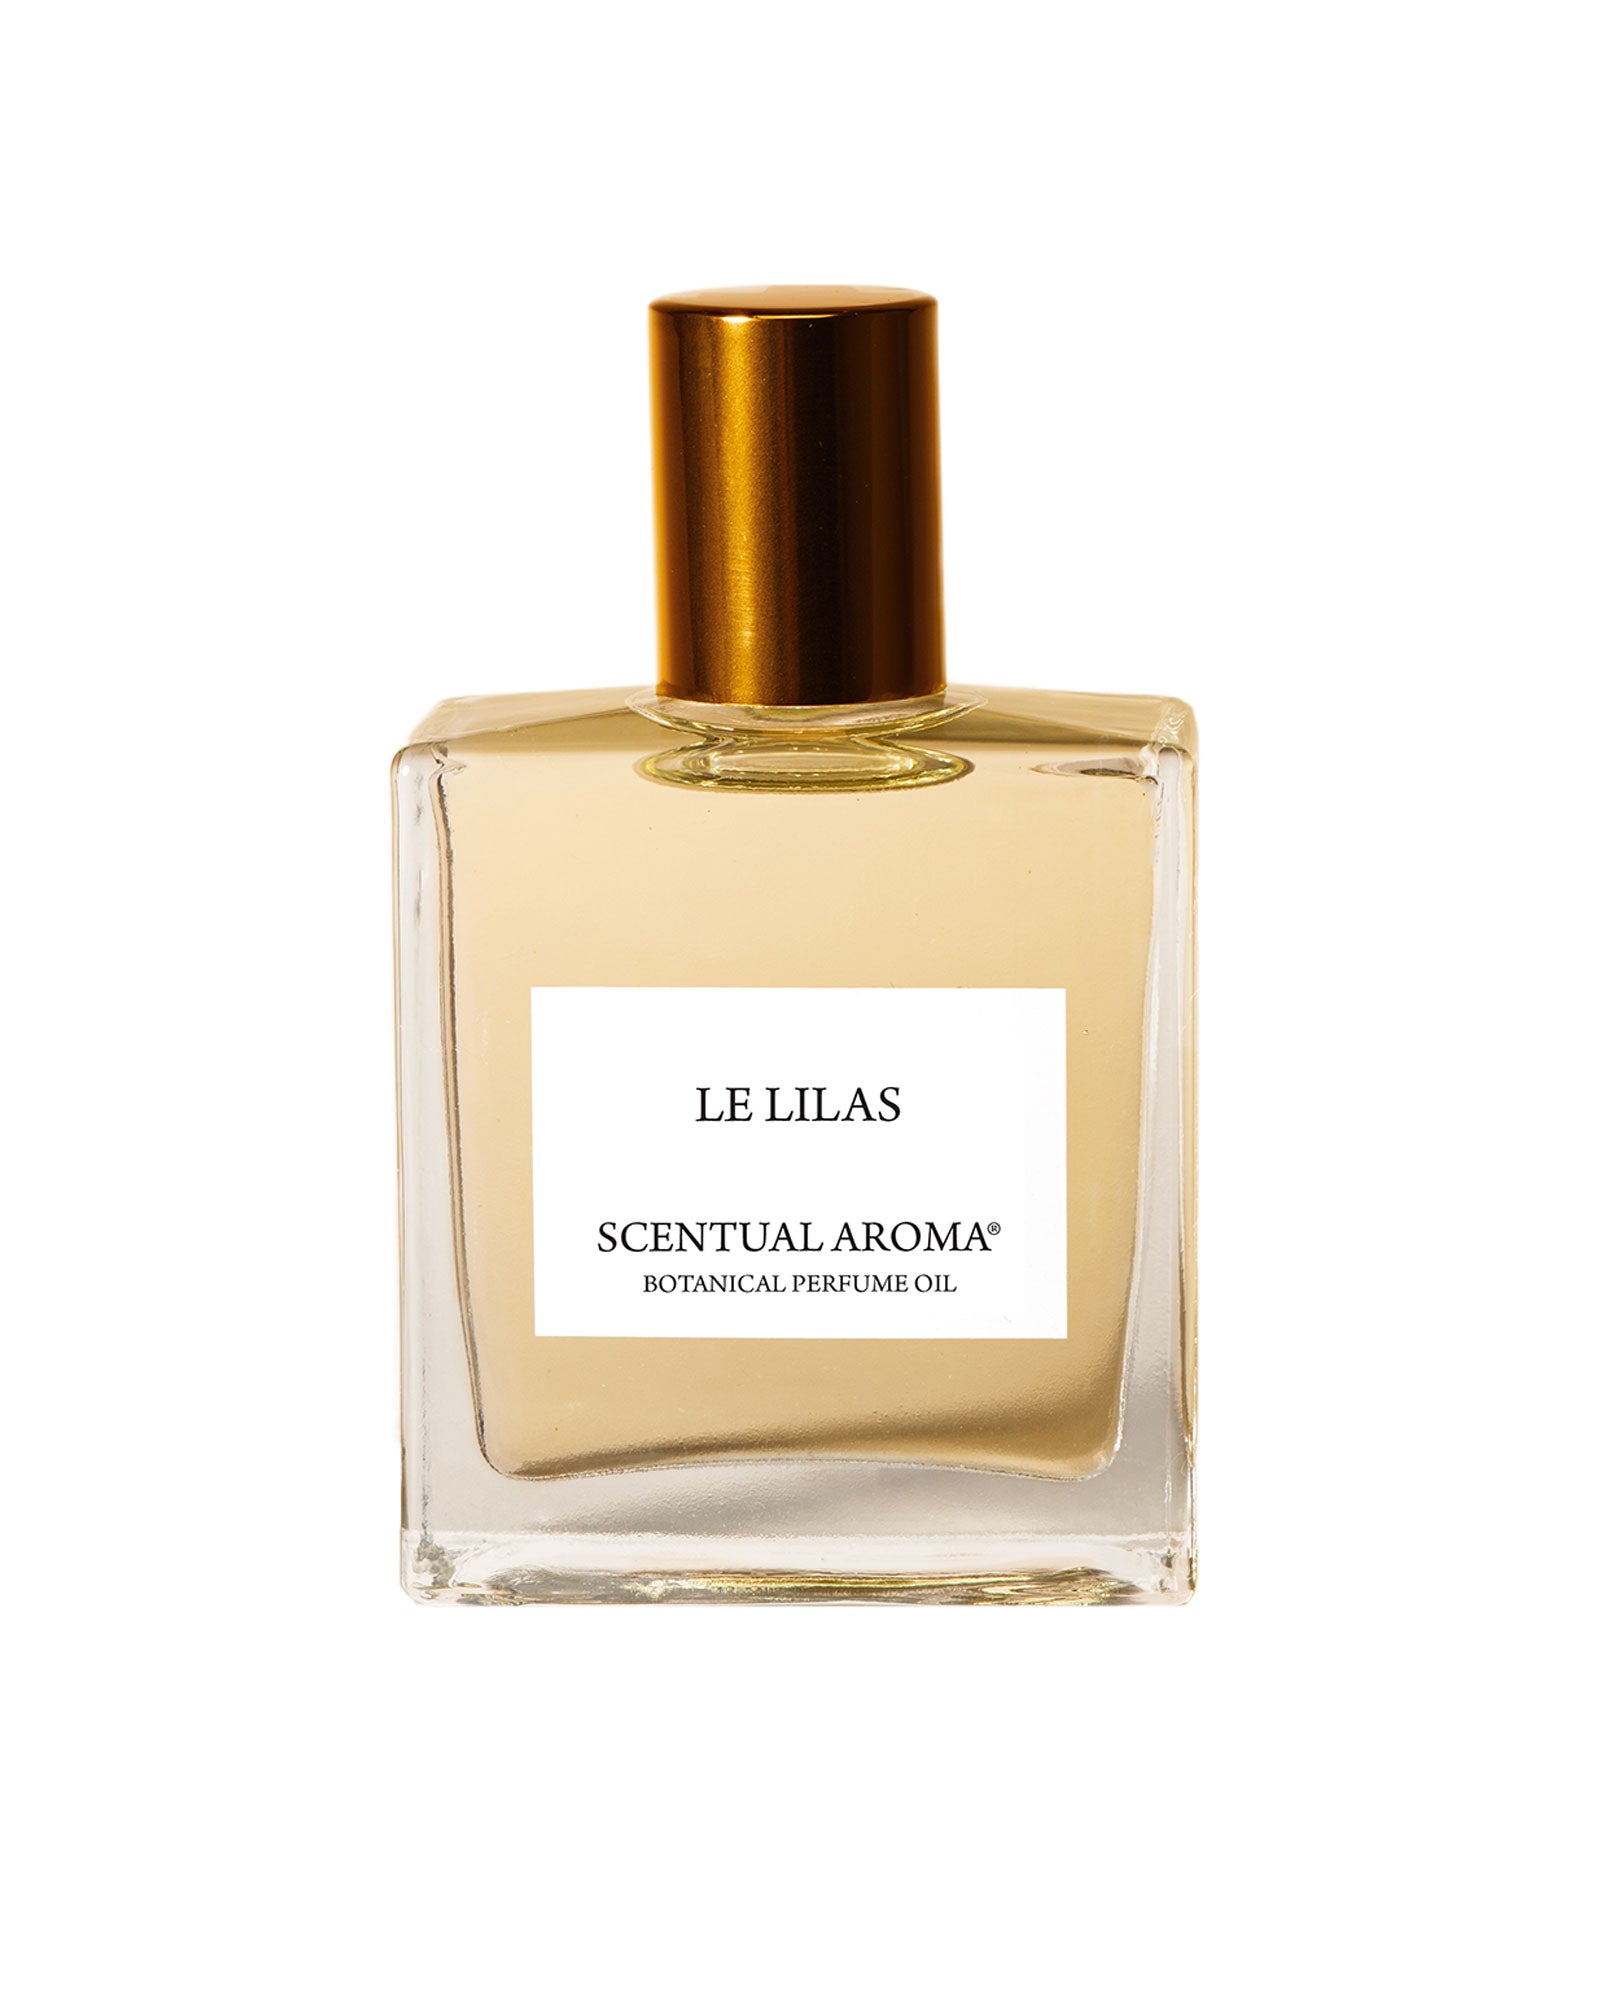 Le Lilas Botanical Perfume Oil